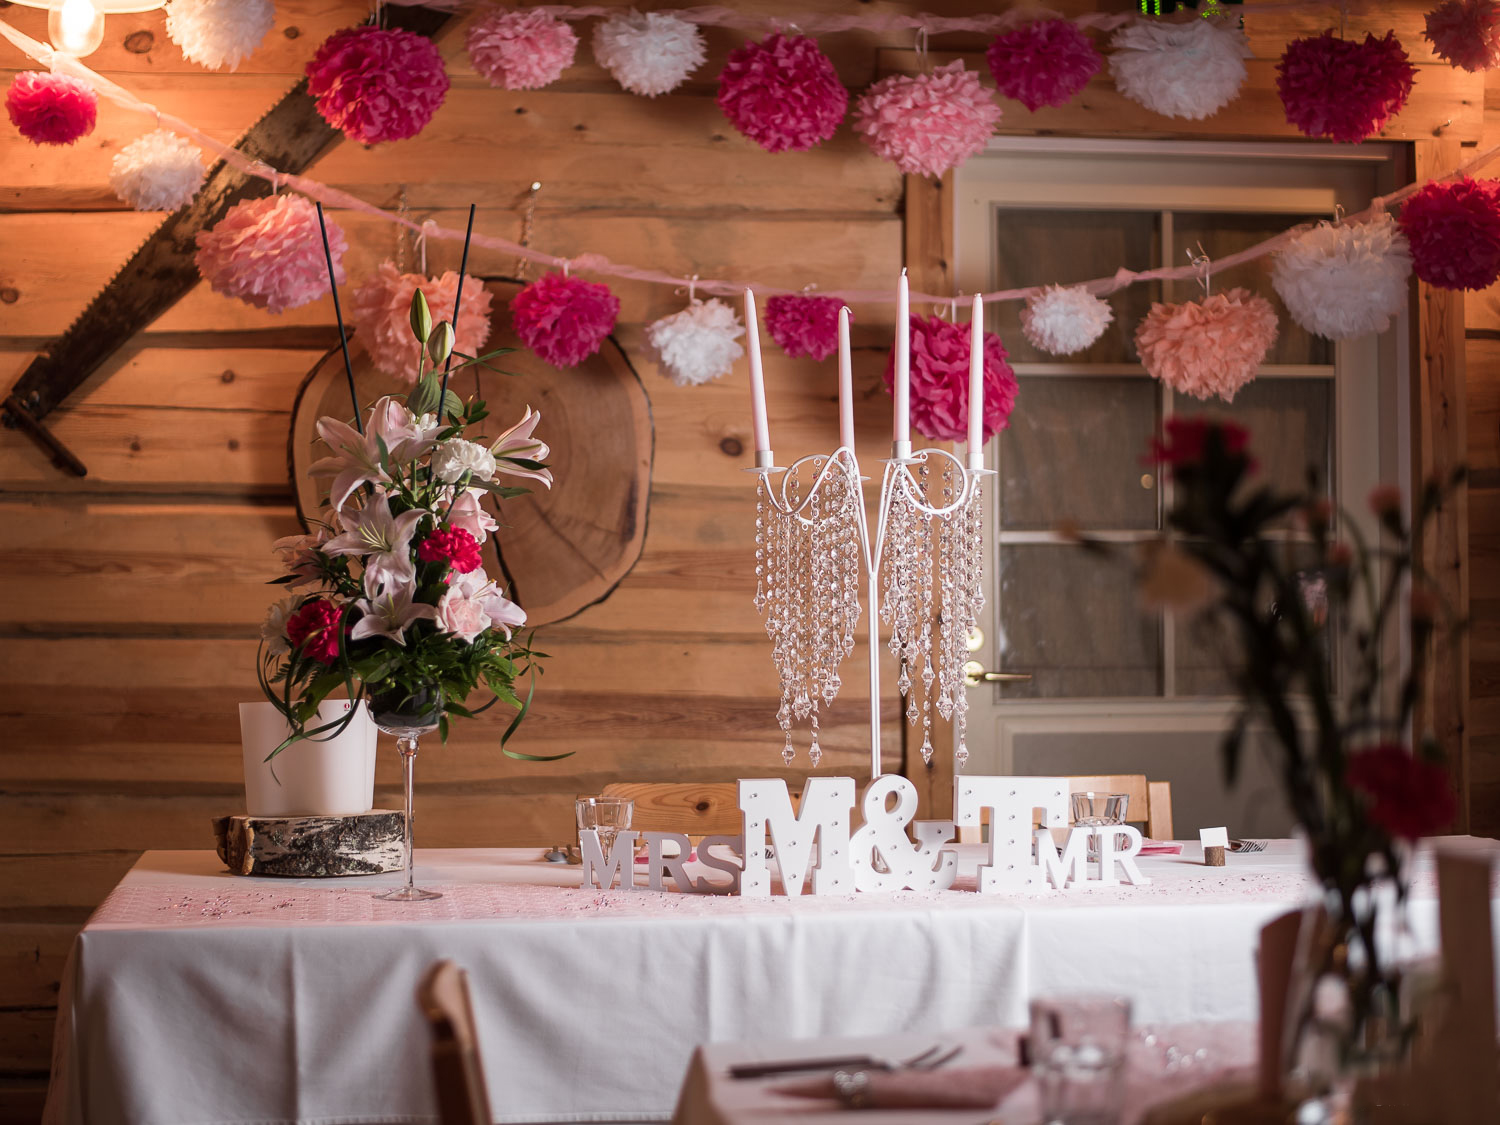 Decorative wedding table setting